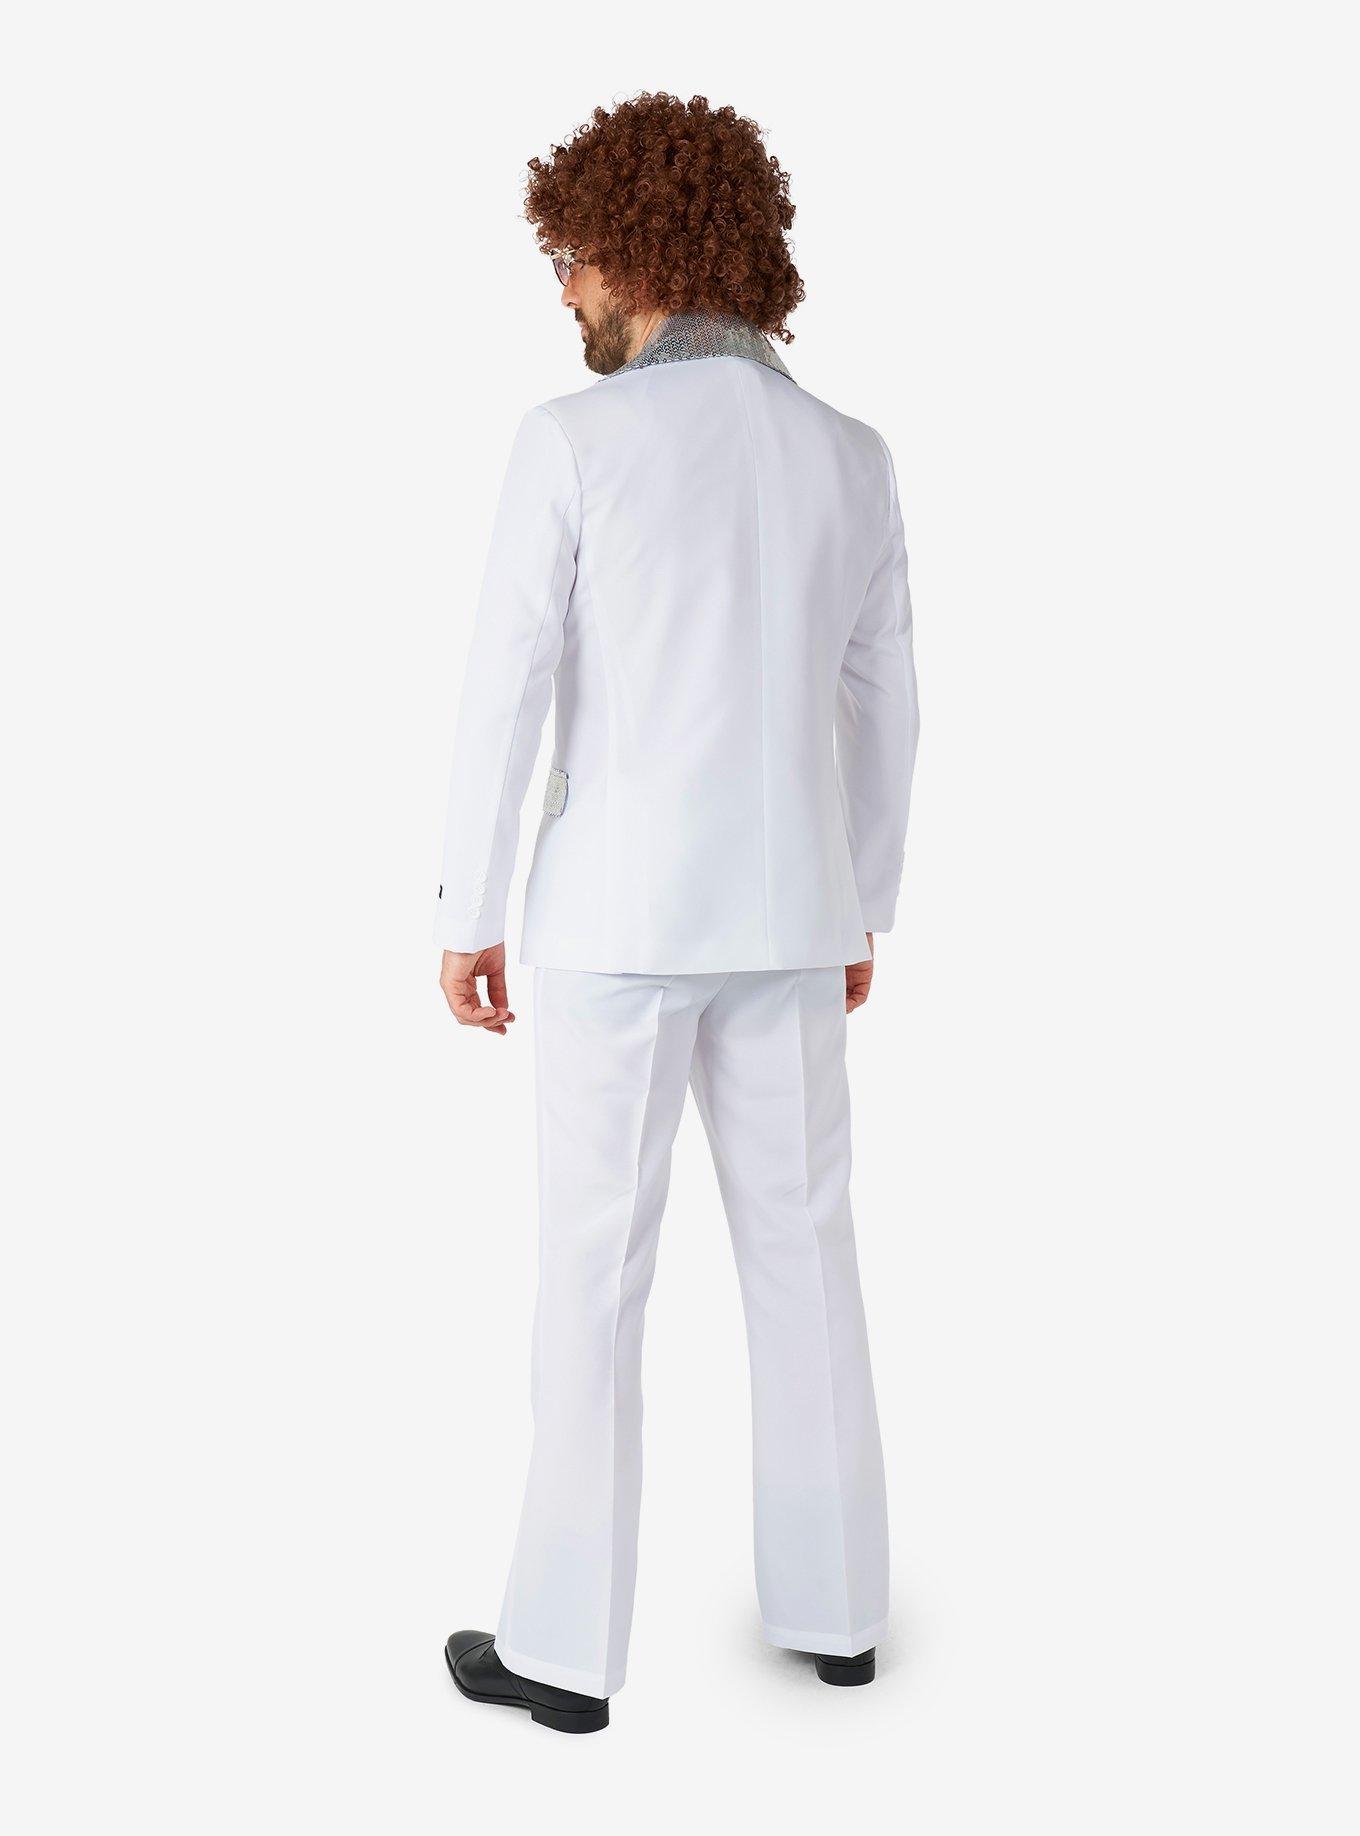 Disco White Suit